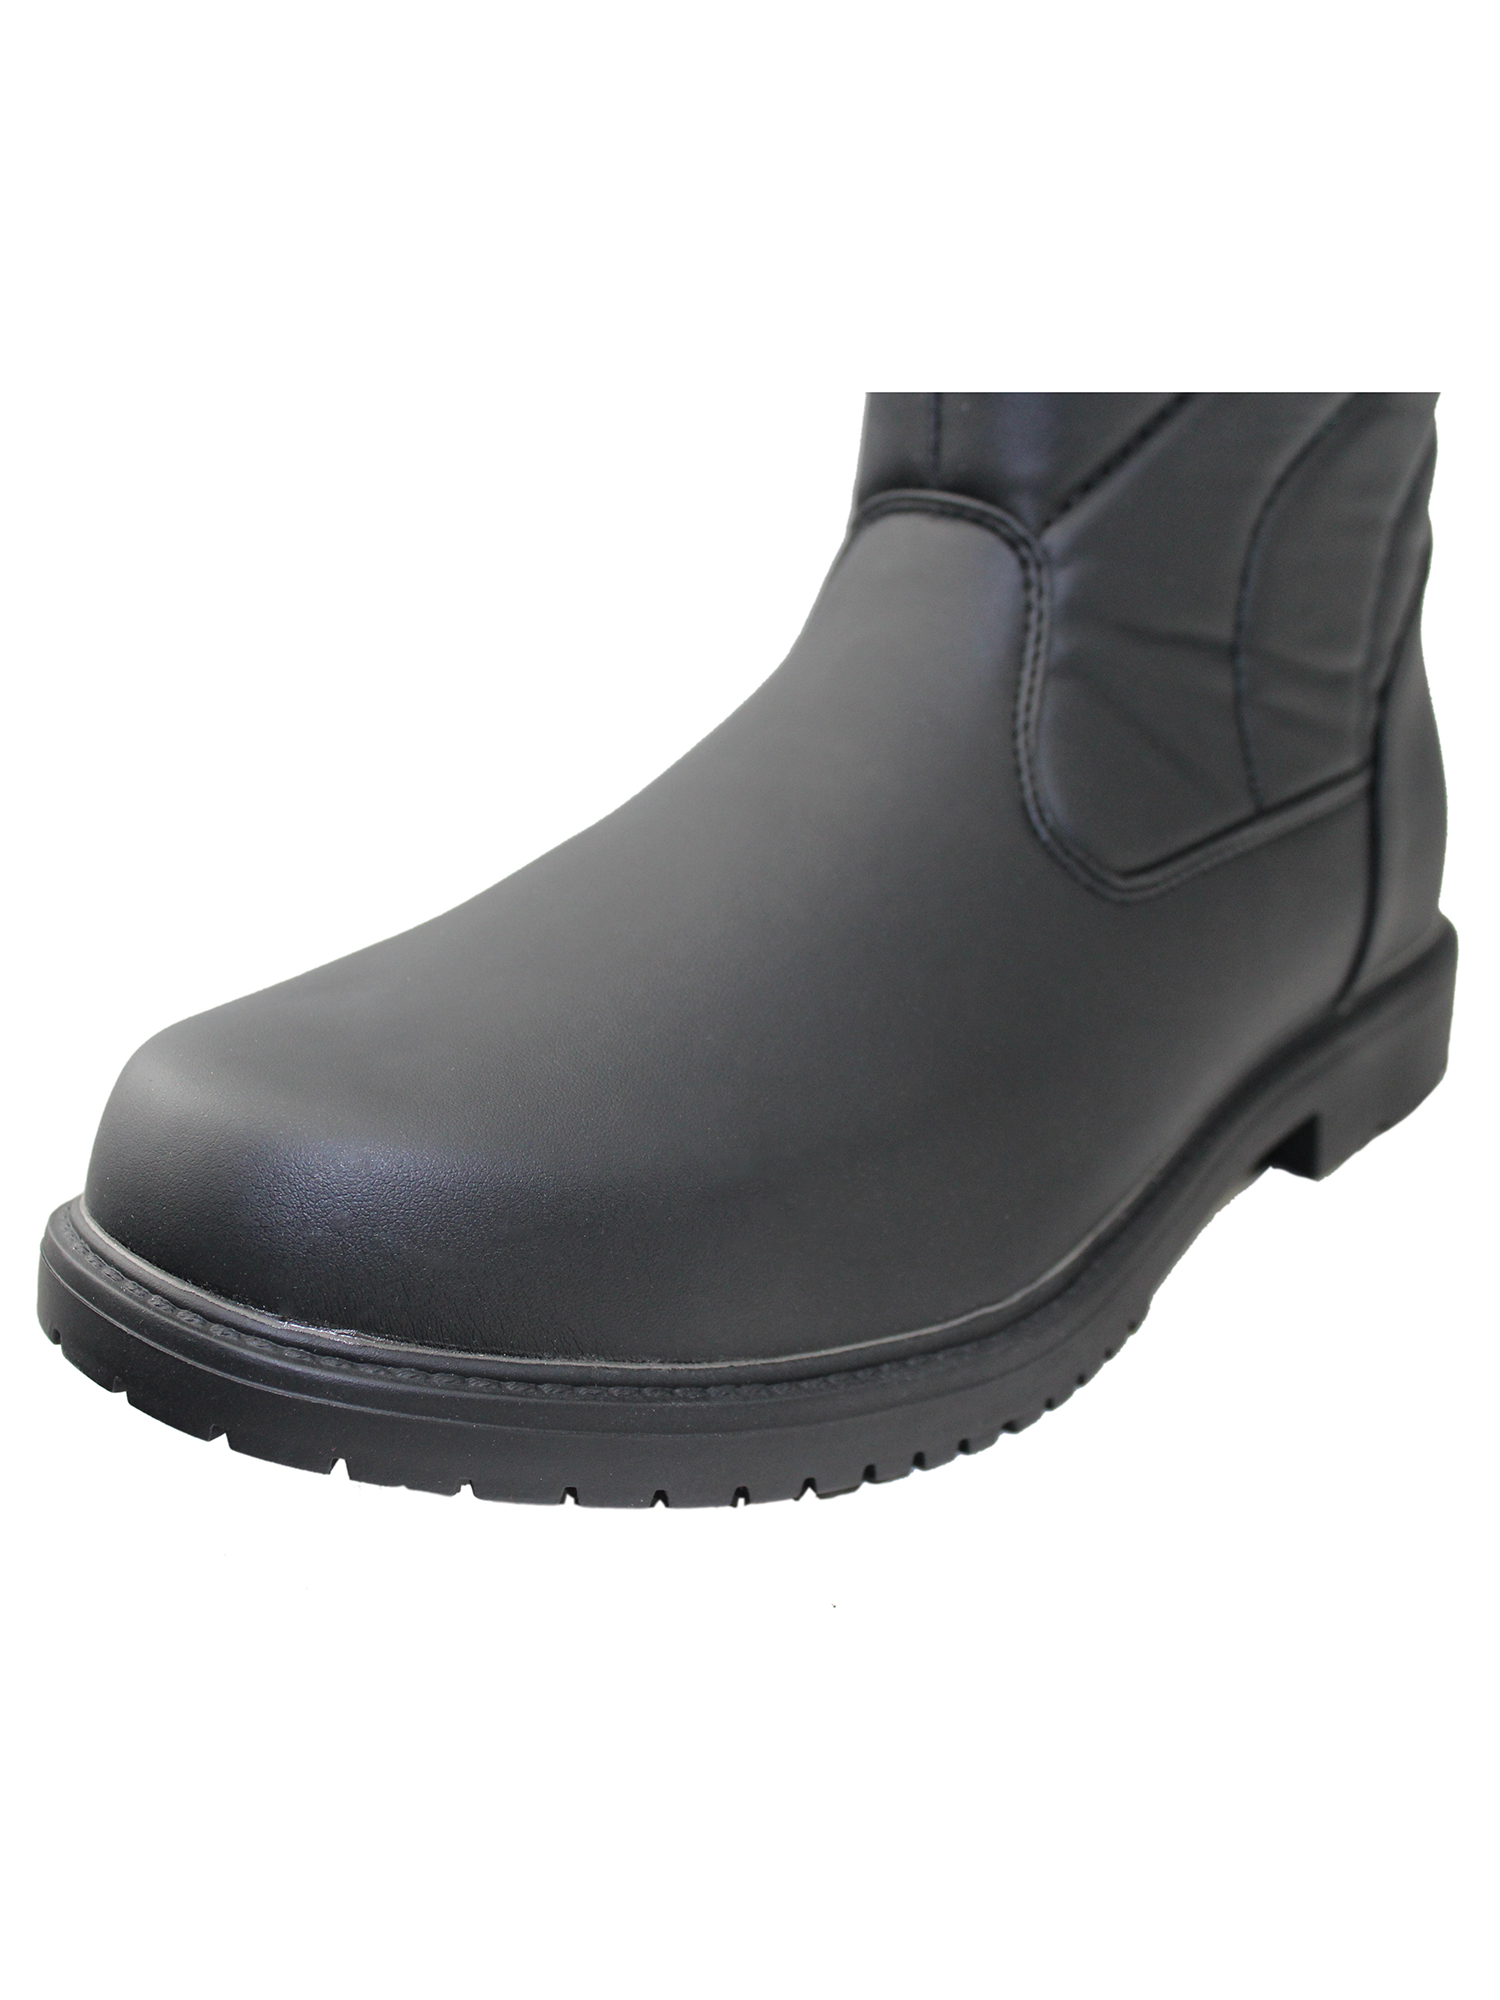 Tanleewa Men's Winter Boots Fur Lining Waterproof Non Slip Snow Boots Side Zipper Shoe Size 8 - image 4 of 6